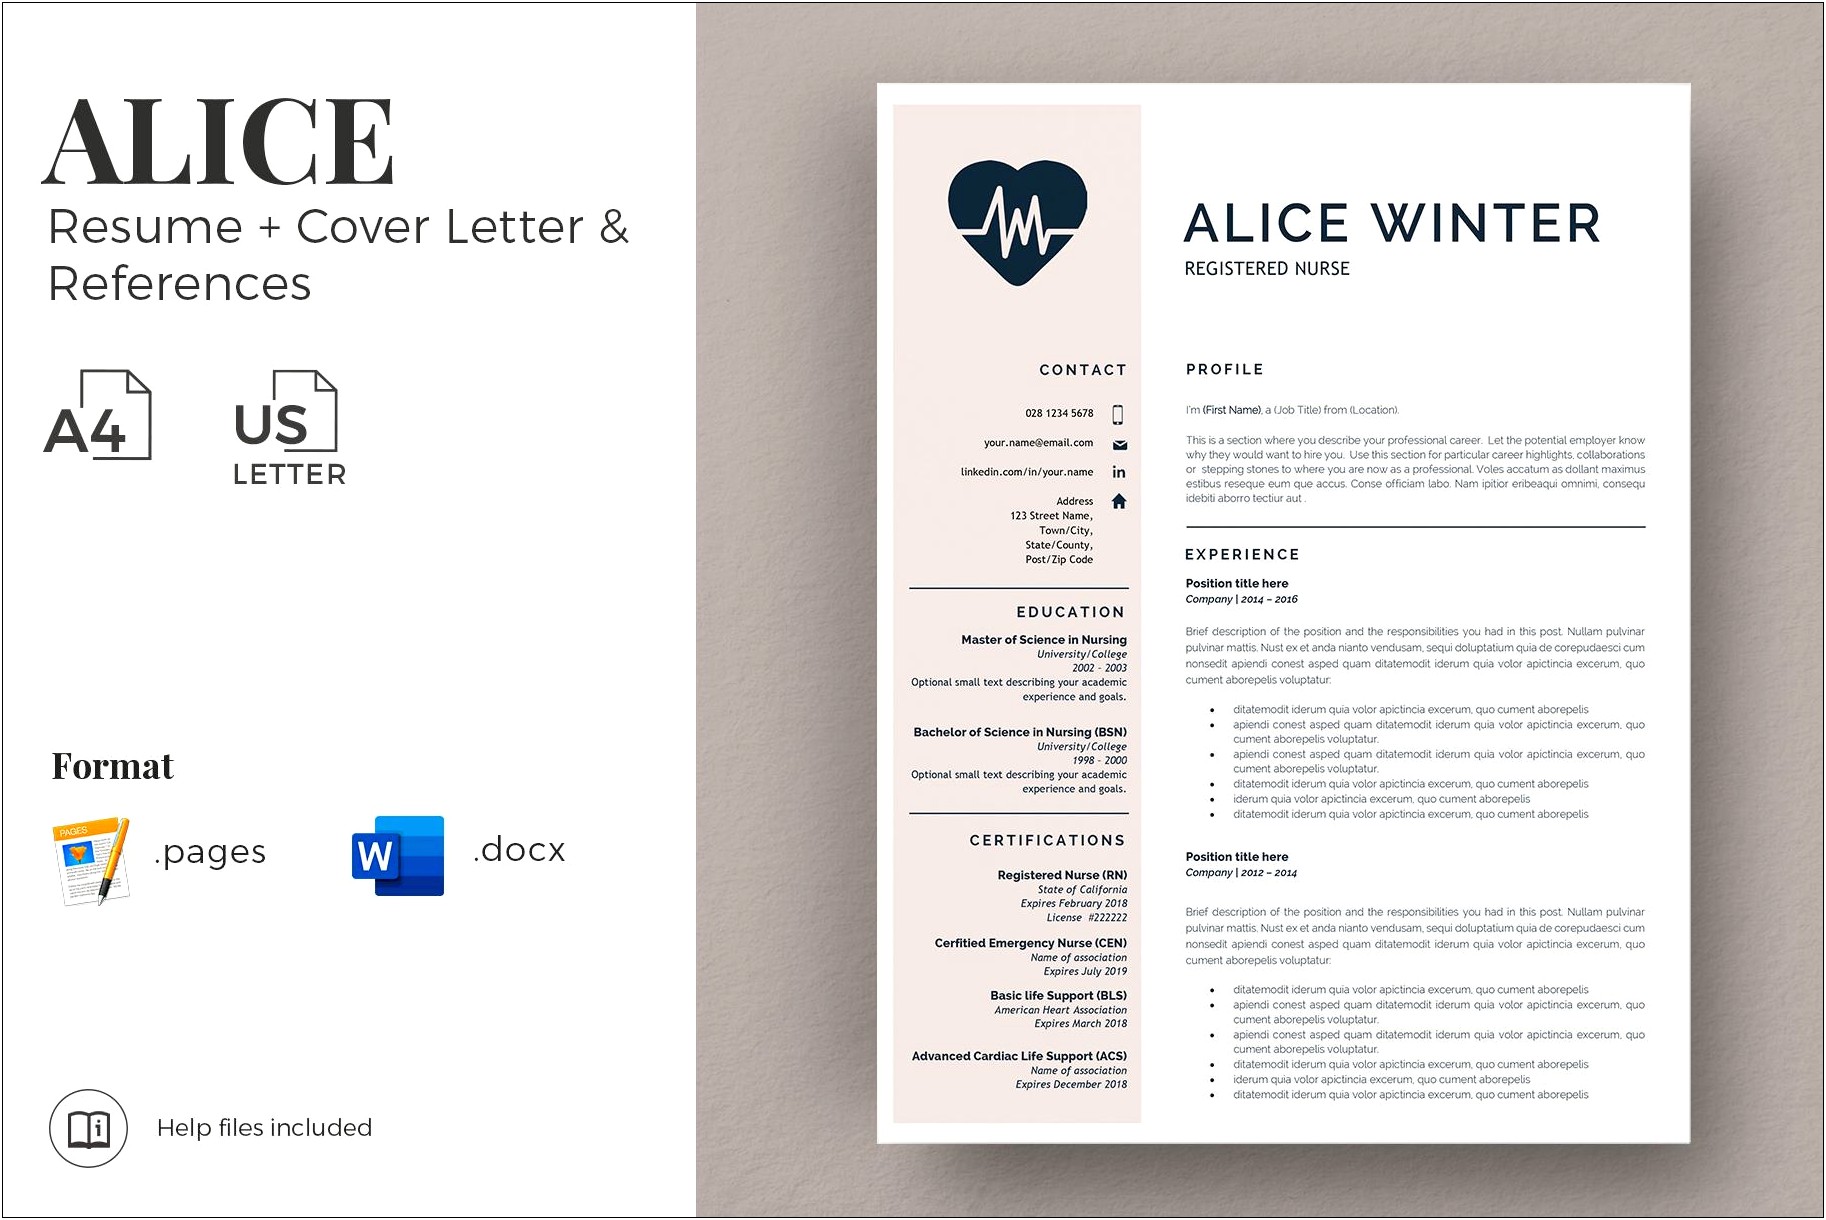 Resume Cover Letter Registered Nurse Example